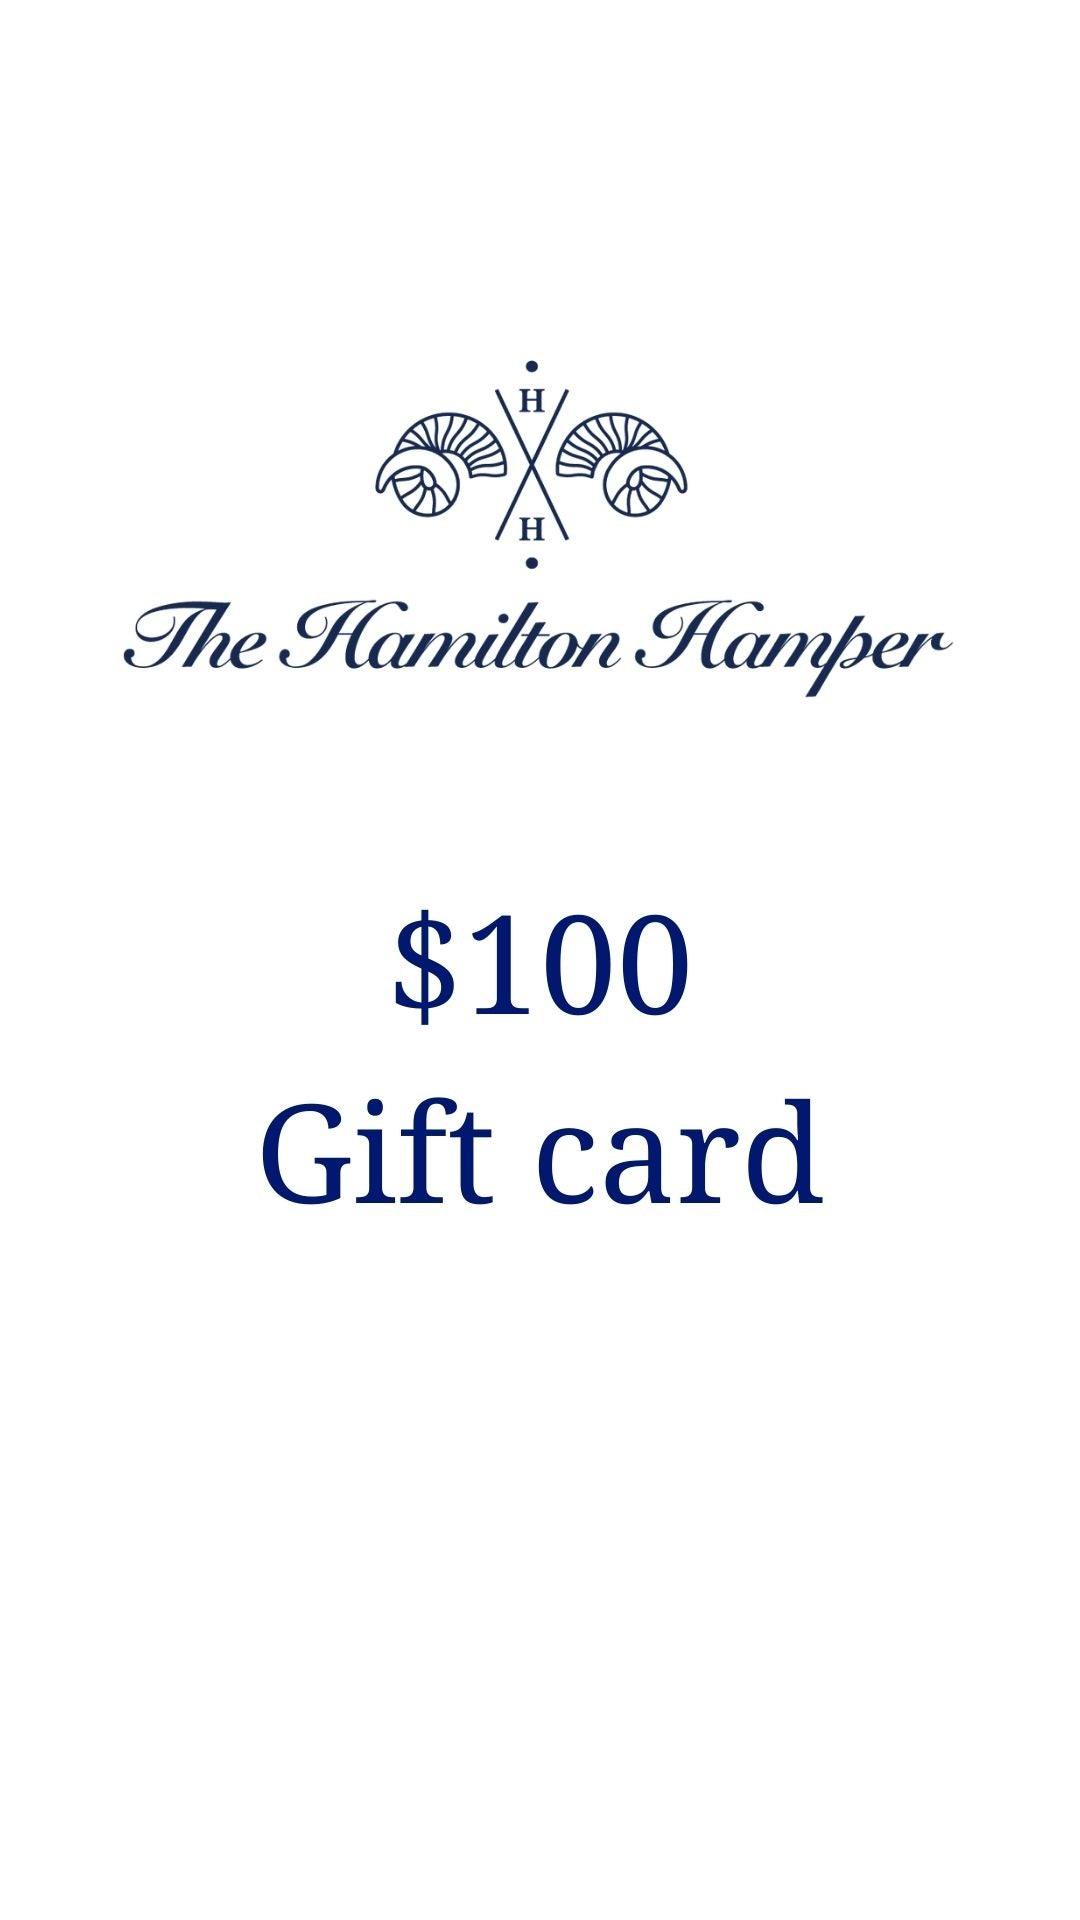 Gift Voucher - The Hamilton Hamper